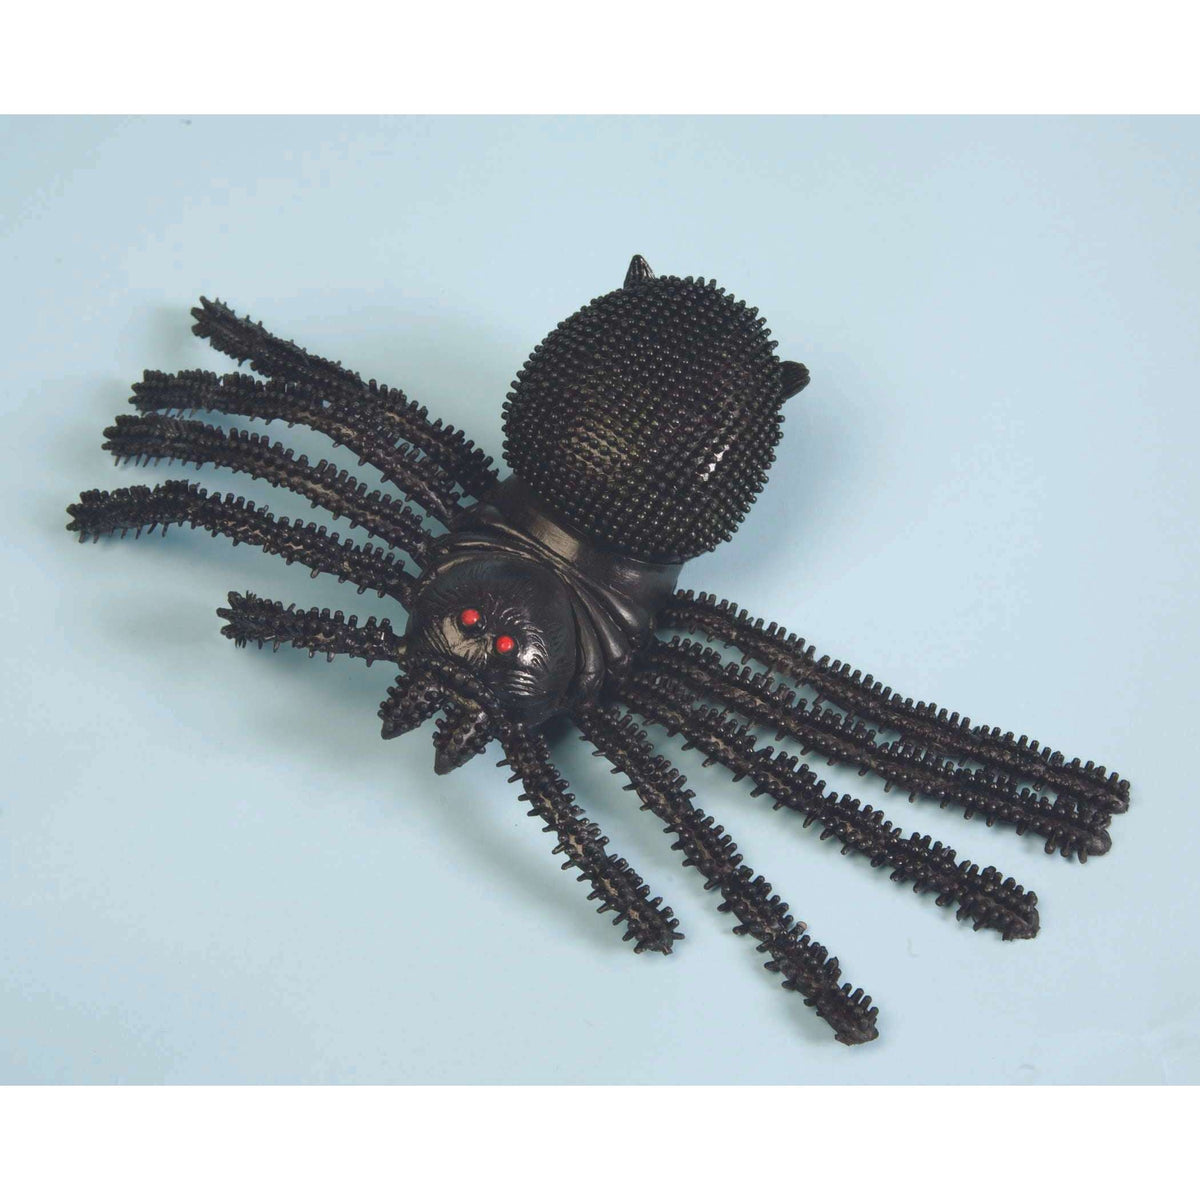 10" Black Tarantula with Hanging Legs